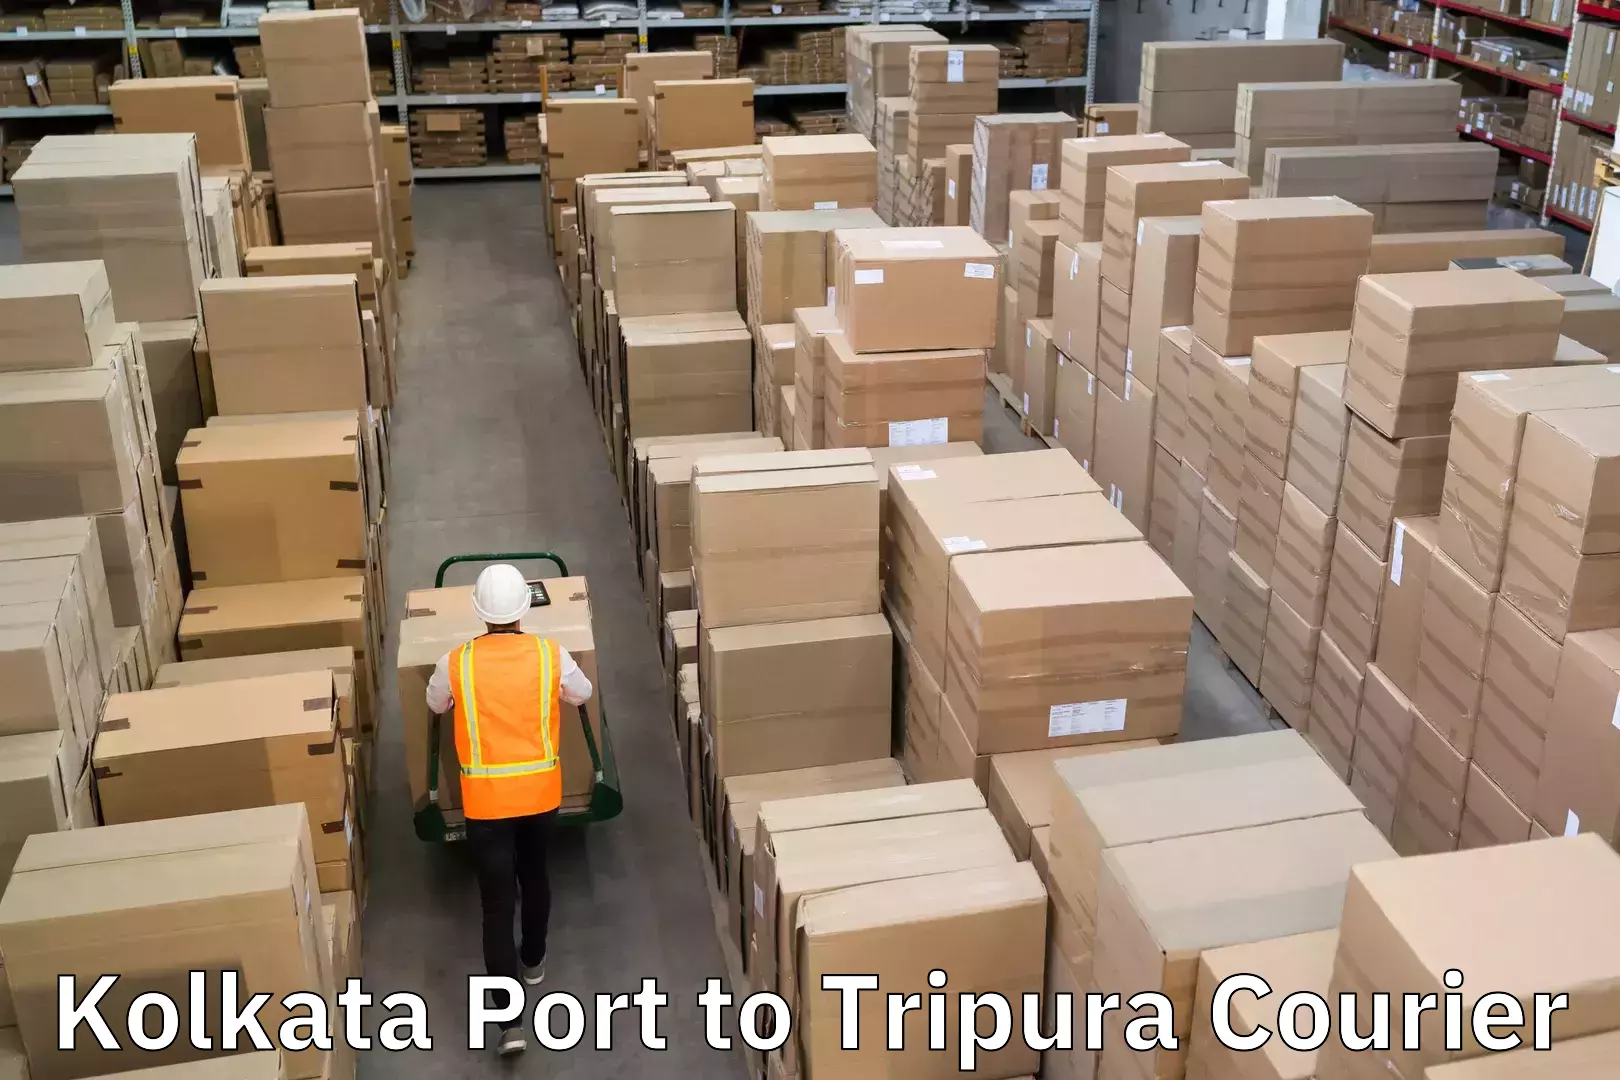 Subscription-based courier Kolkata Port to Tripura